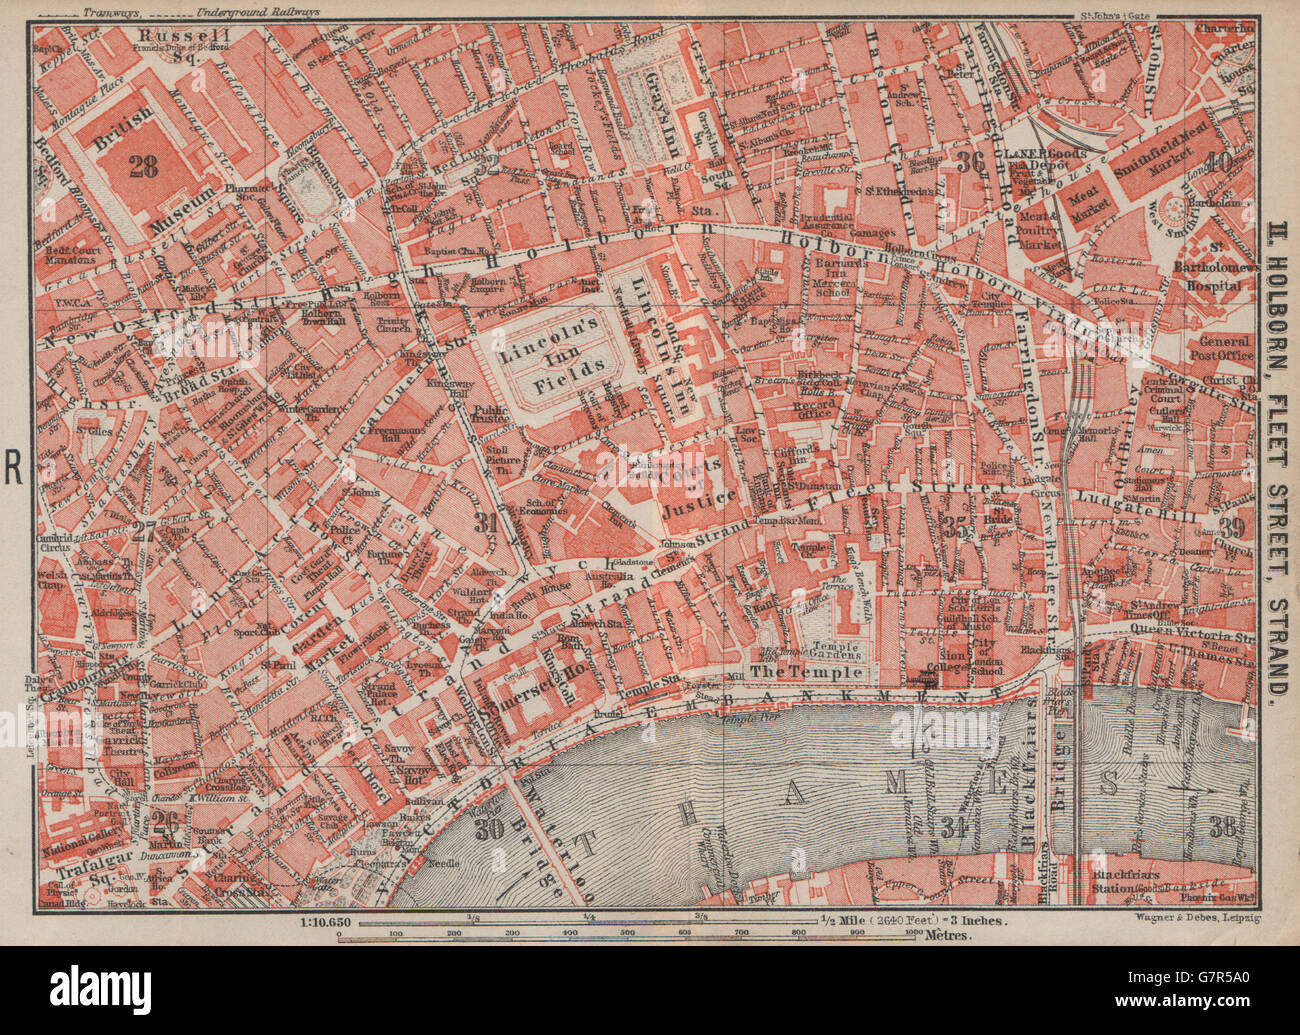 LONDON Holborn Fleet Street Strand Covent Garden Bloomsbury Smithfield, 1930 map Stock Photo